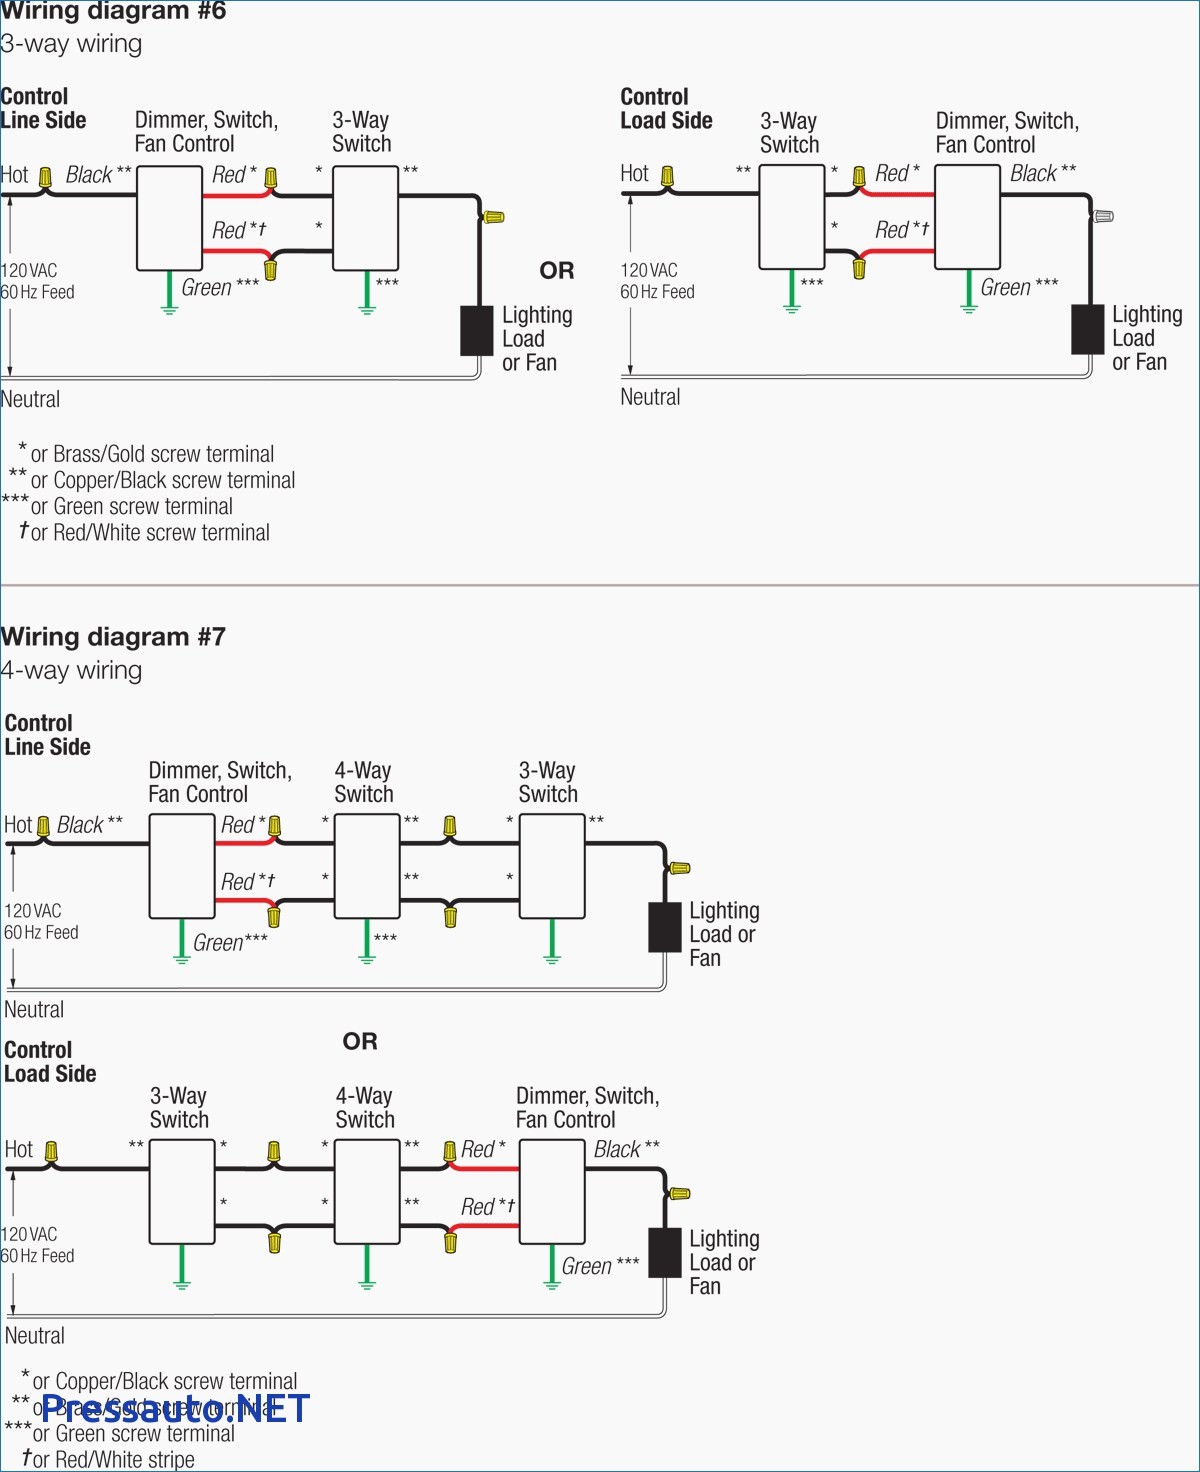 lutron occupancy sensor wiring diagram sample wiring diagram rh magnusrosen net Lutron HomeWorks Wiring Diagram Lutron Dimmer Wiring Diagram